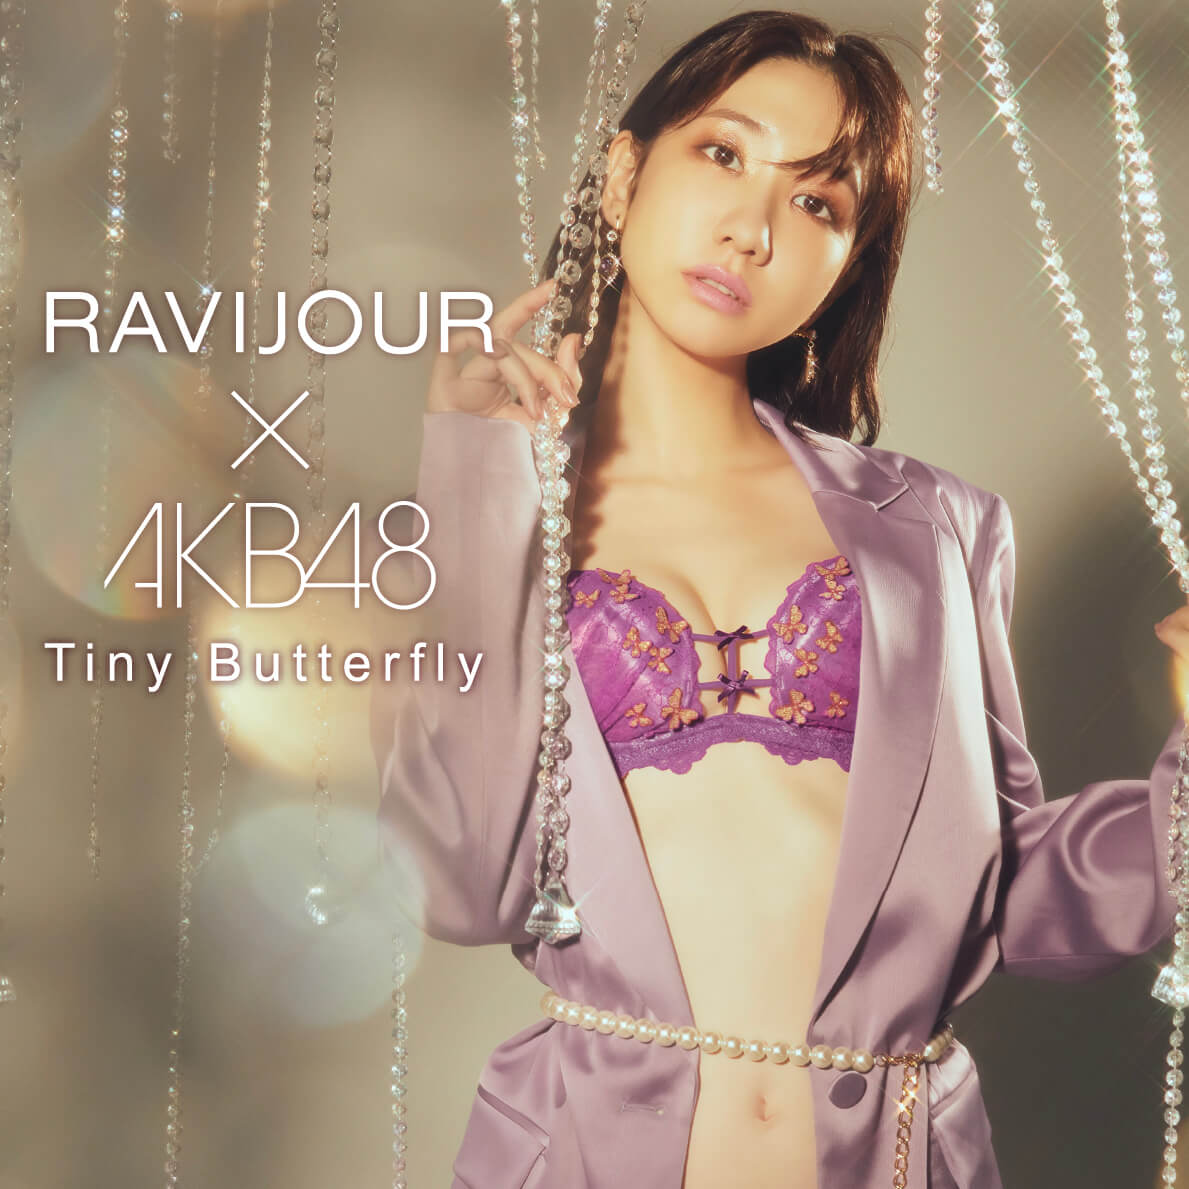 AKB48 x RAVIJOUR - タイニーバタフライ ホットリフト ブラ